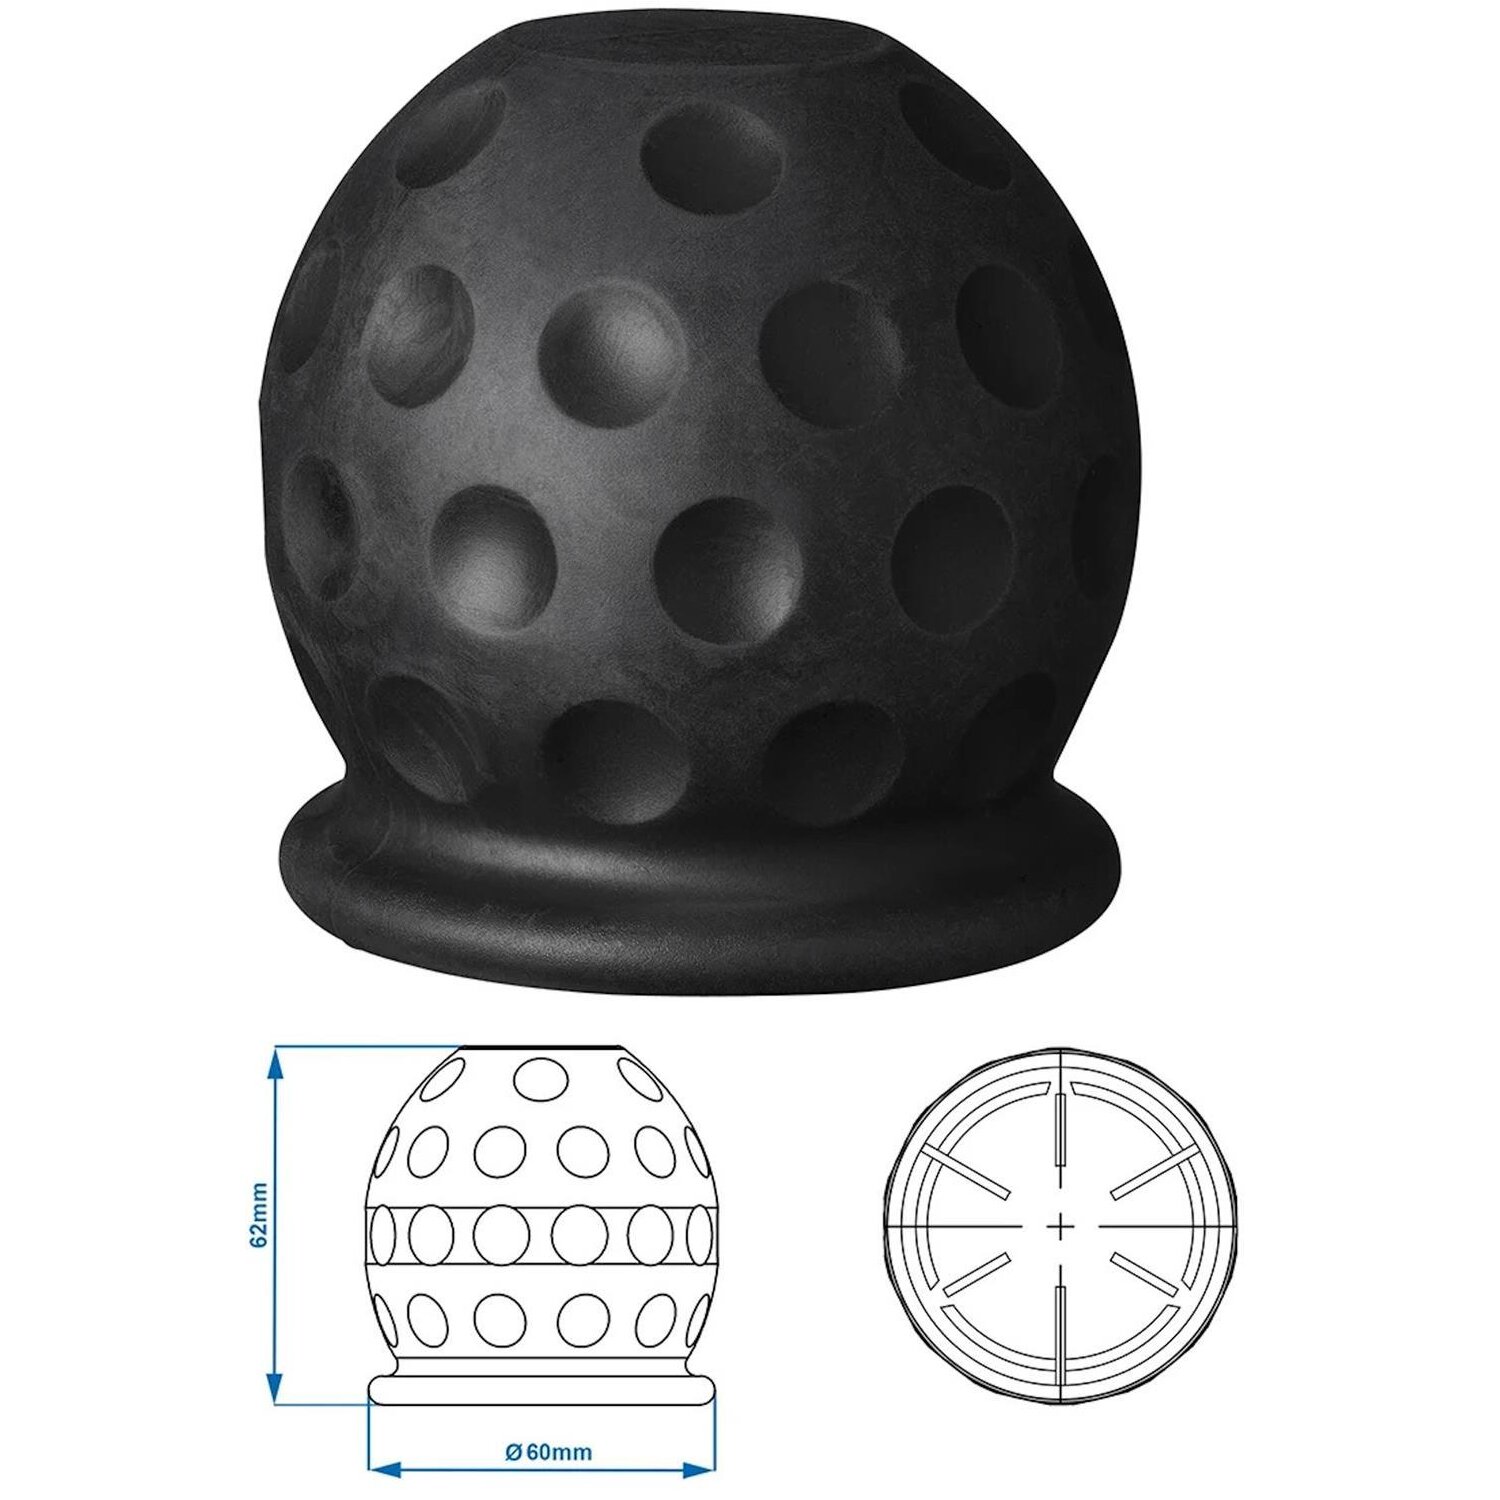 https://www.preiswert-gut.com/media/image/product/7641/lg/abdeckkappe-schwarz-anhaengerkupplung-passend-ahk-kugelschutzkappe-kappe-golfball.jpg